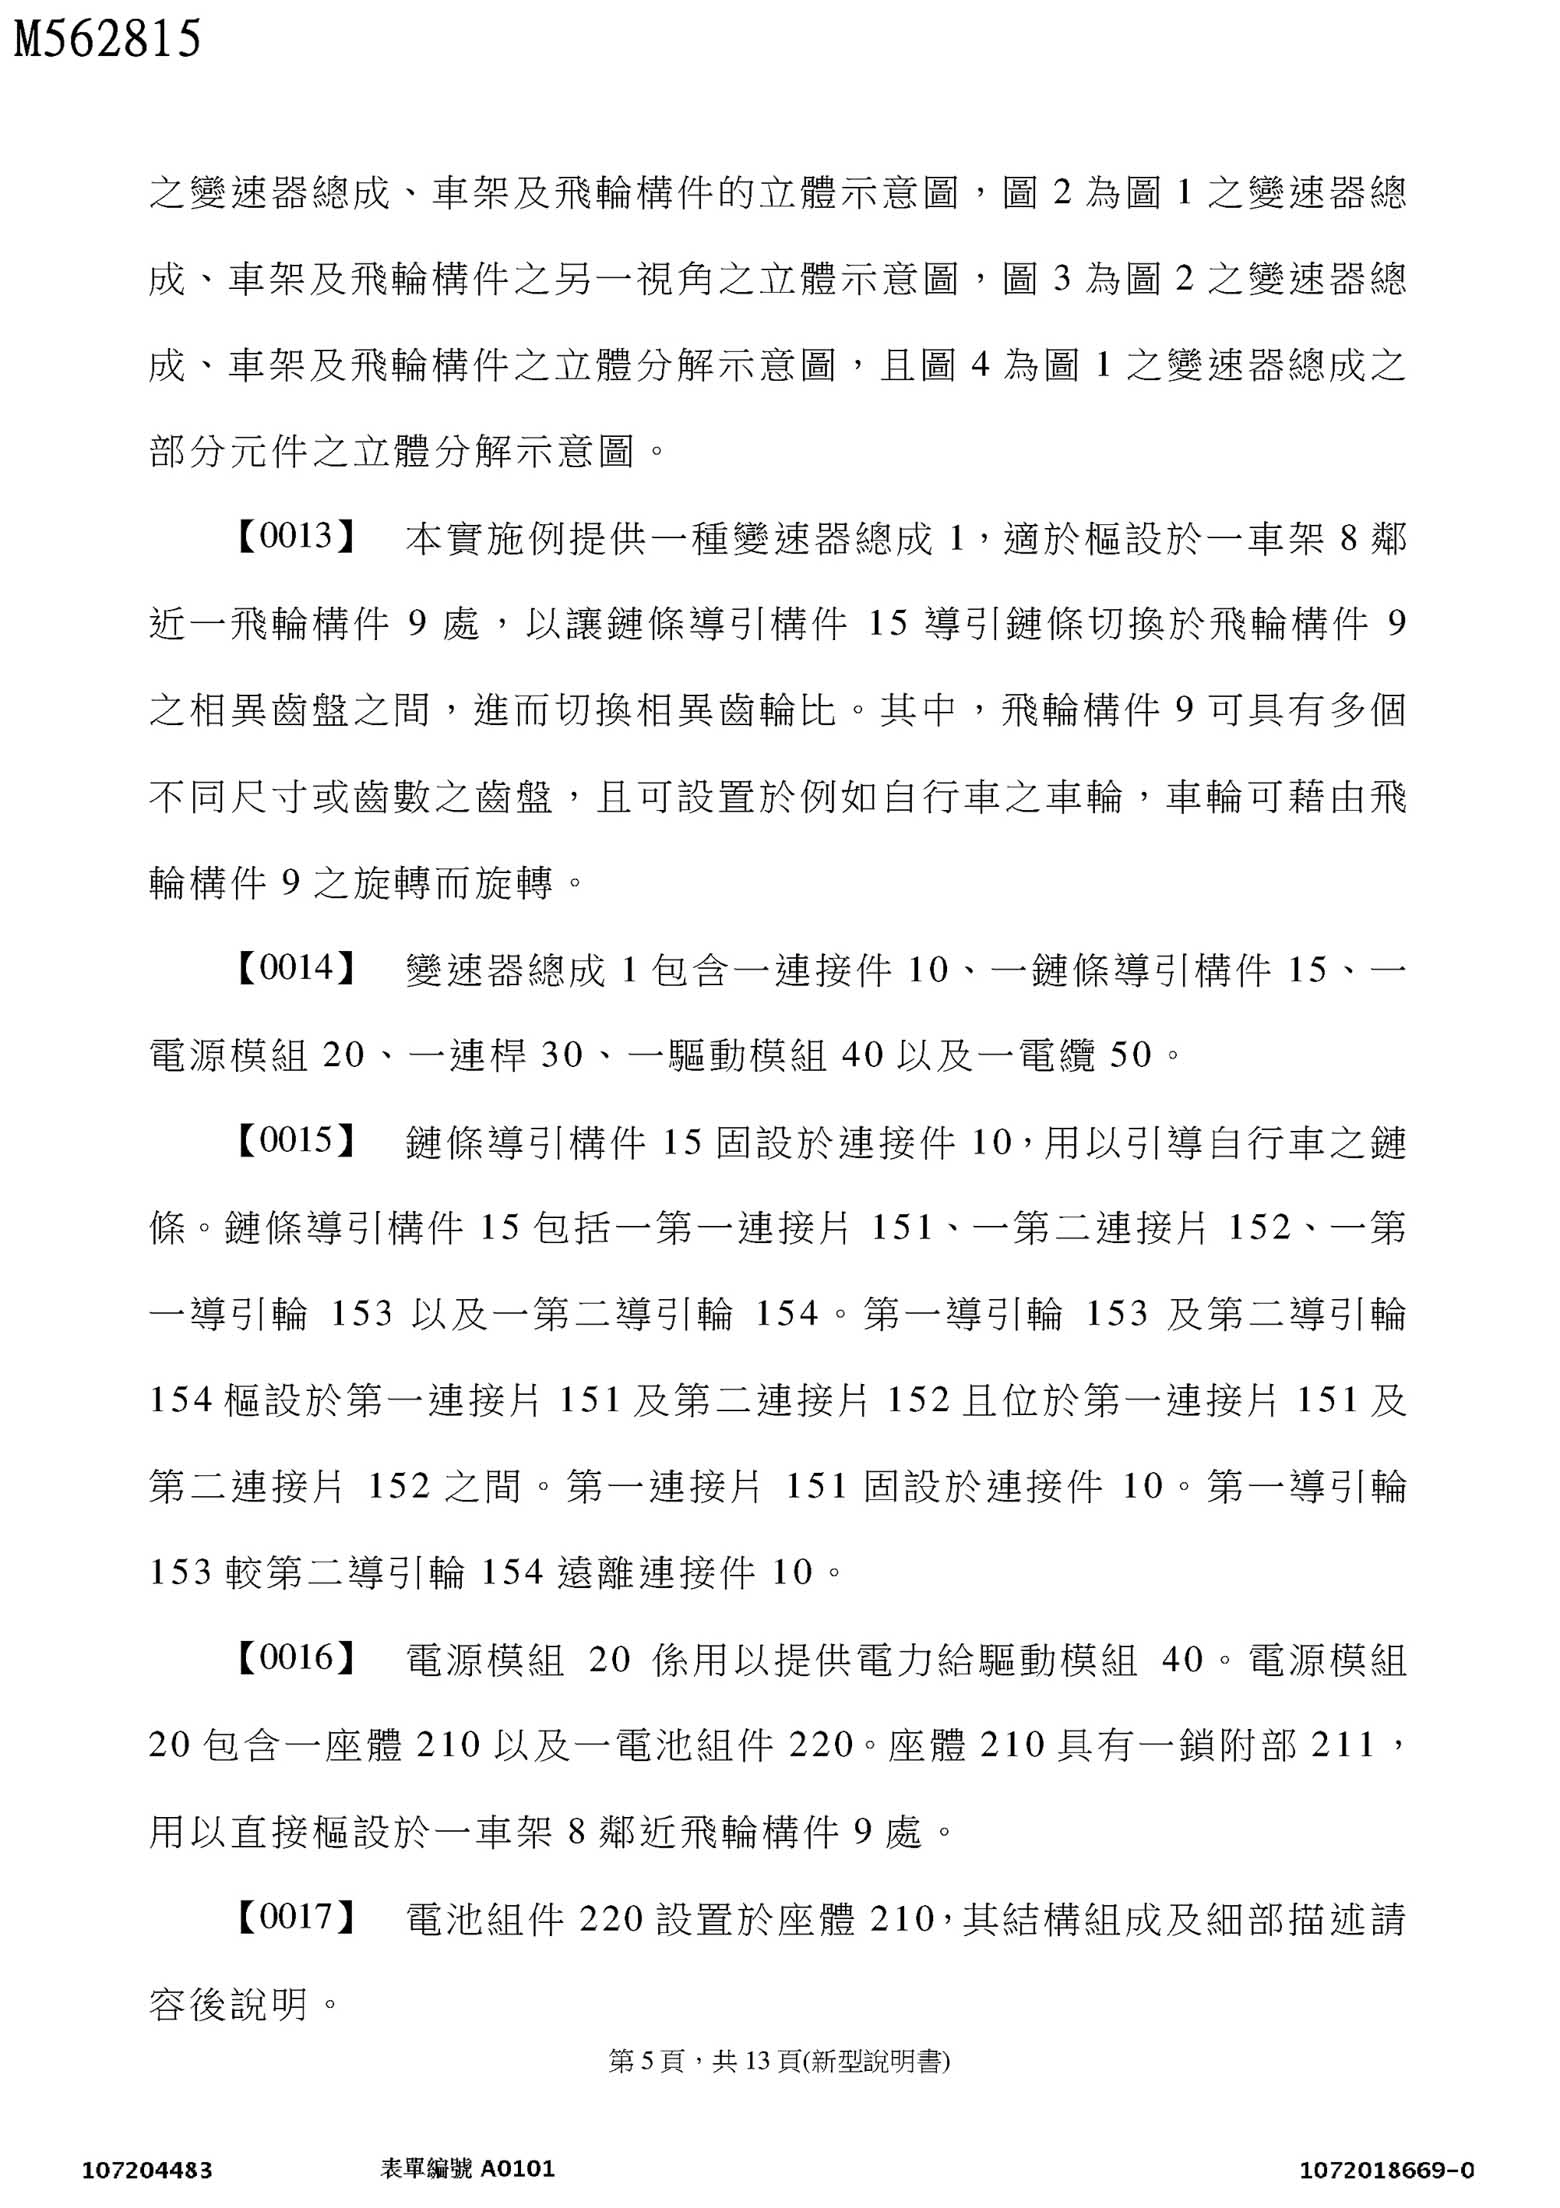 Taiwanese Patent M562815 - Tektro and/or TRP scan 07 main image